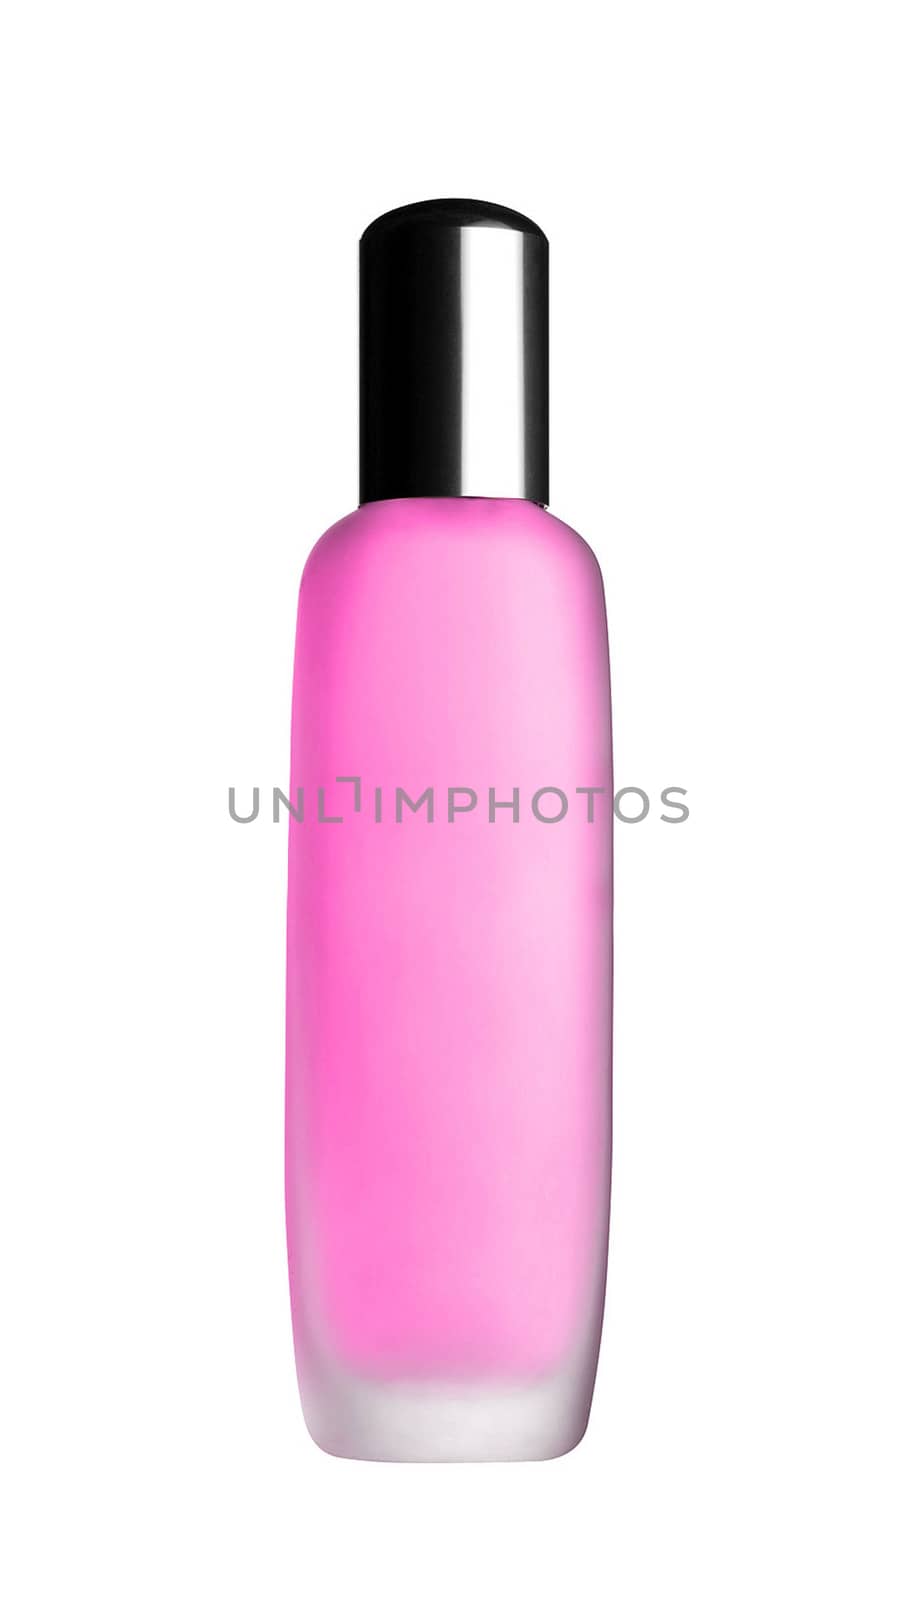 pink toilet bottle by shutswis